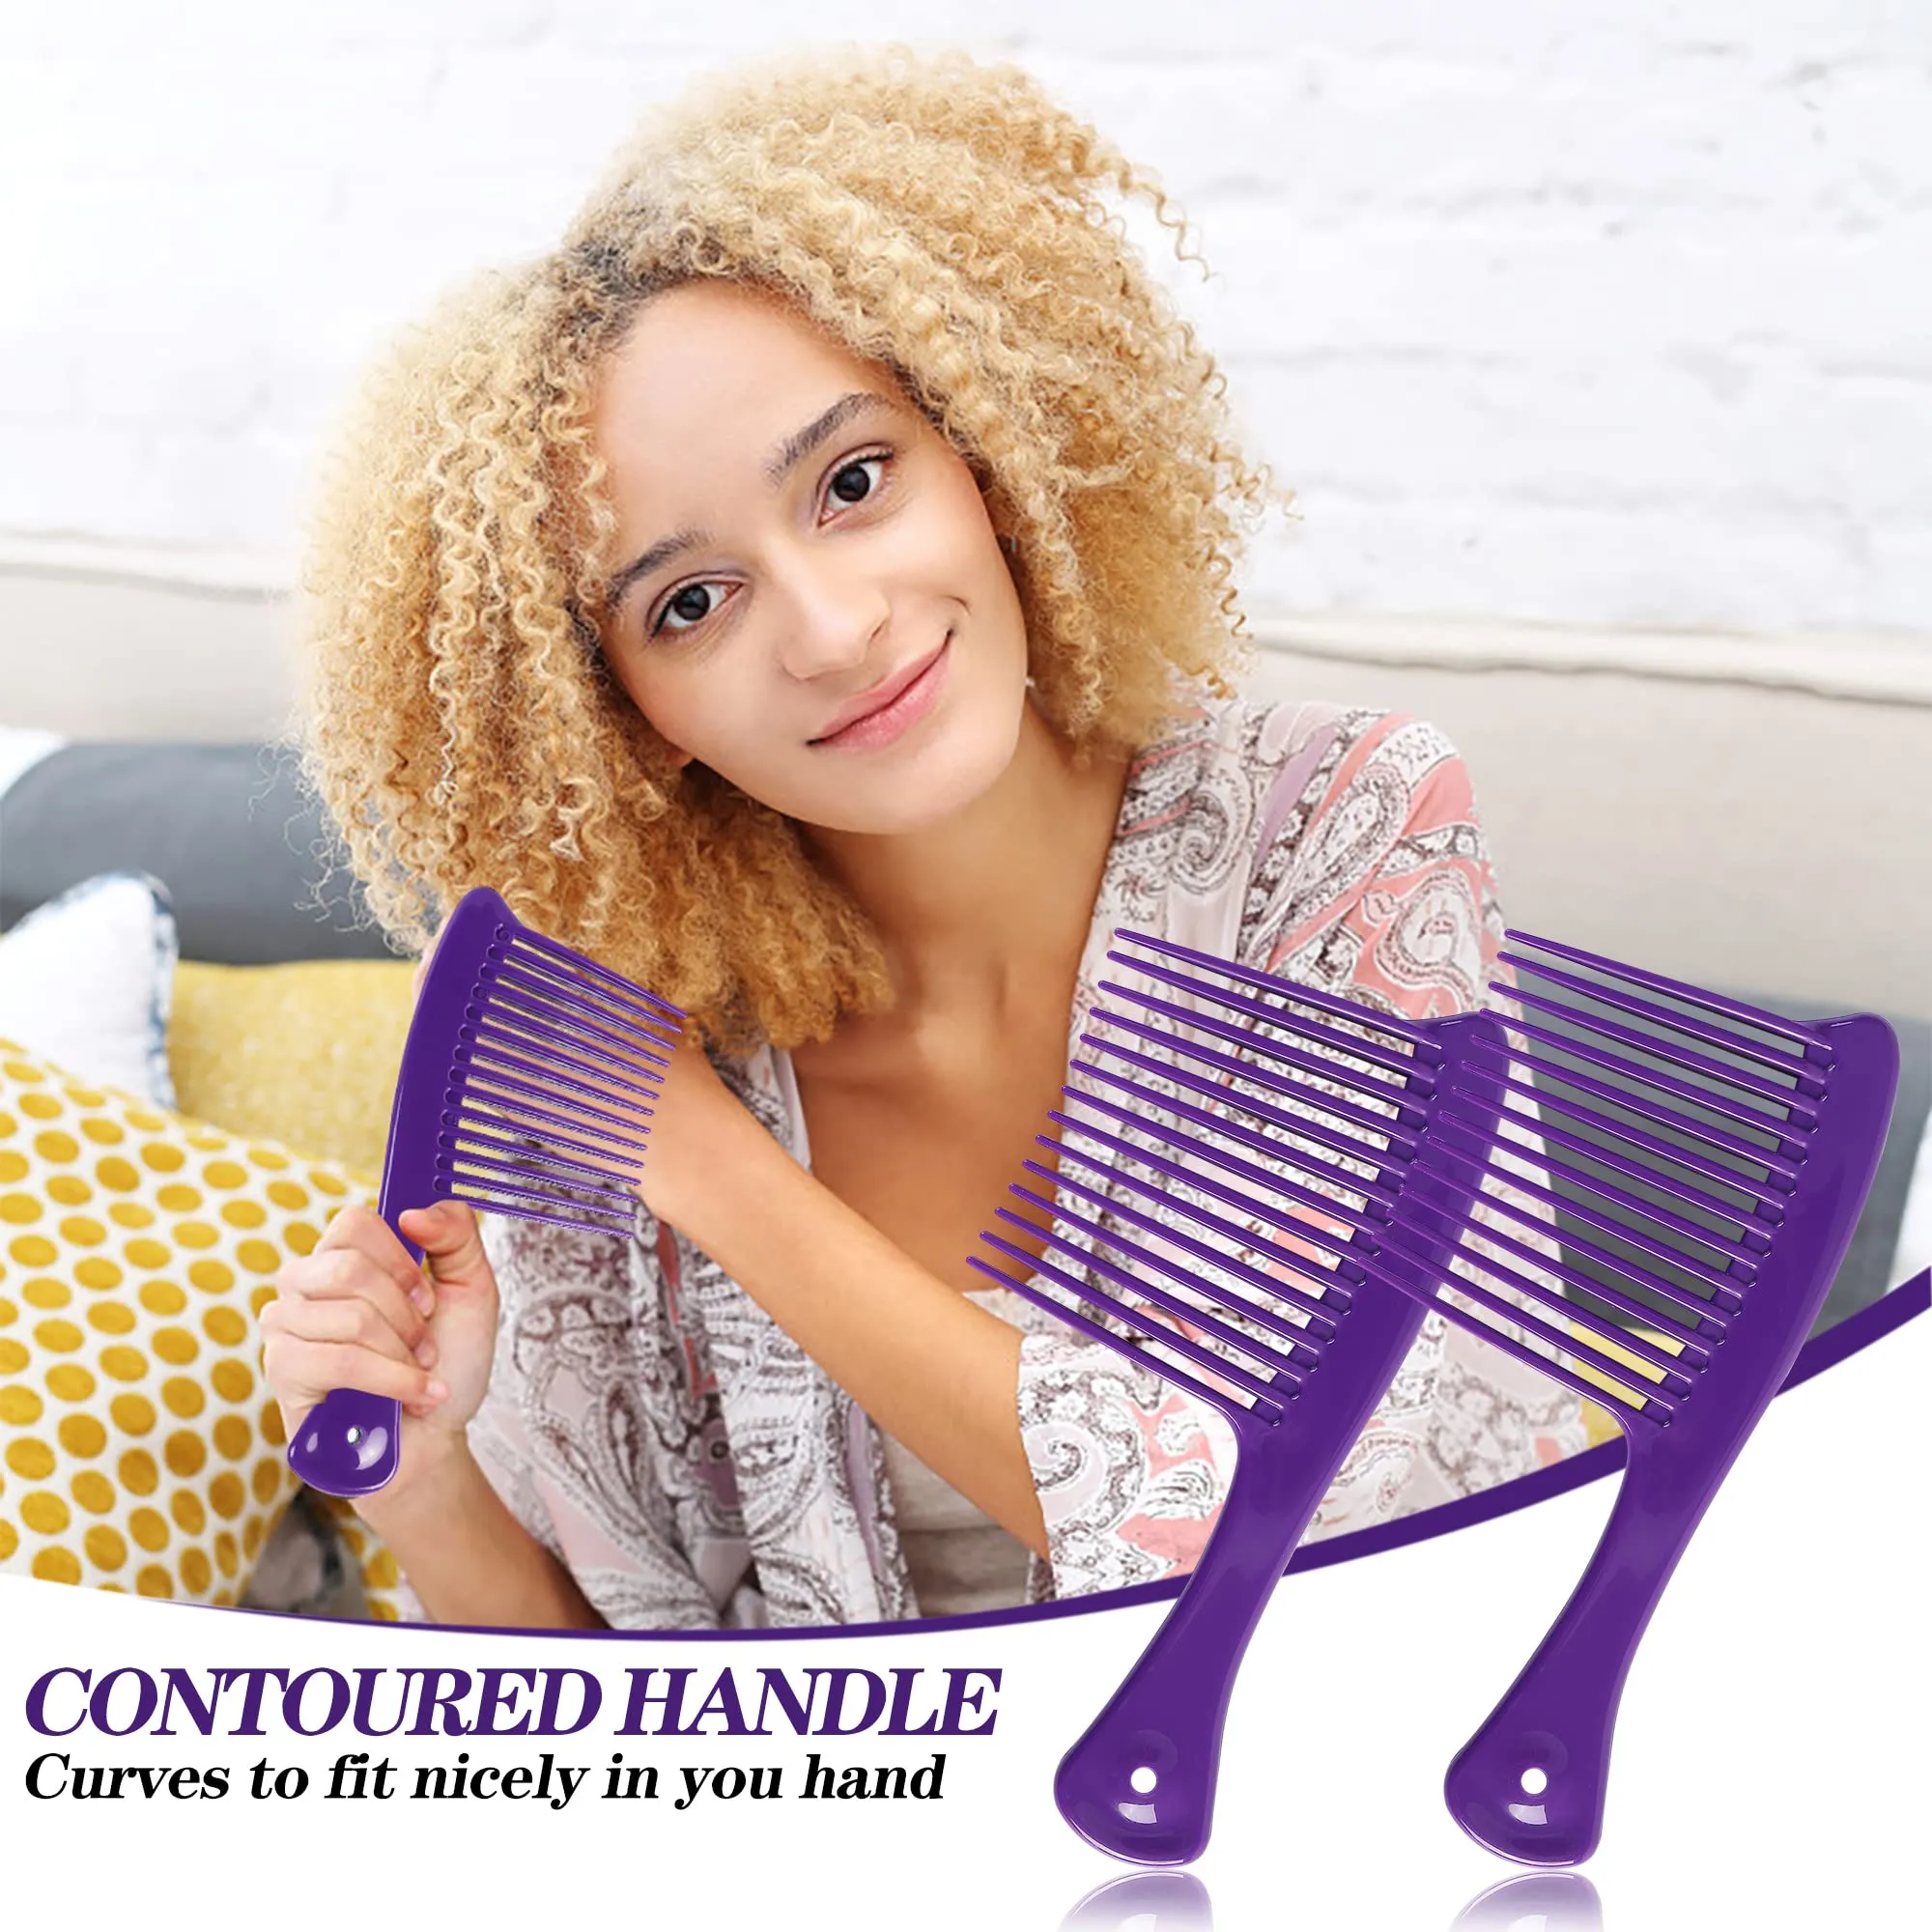 wide tooth comb hair detangler salon shampoo comb for thick hair long hair and curly hair detangling tools for 4c hair jumbo rake comb purple